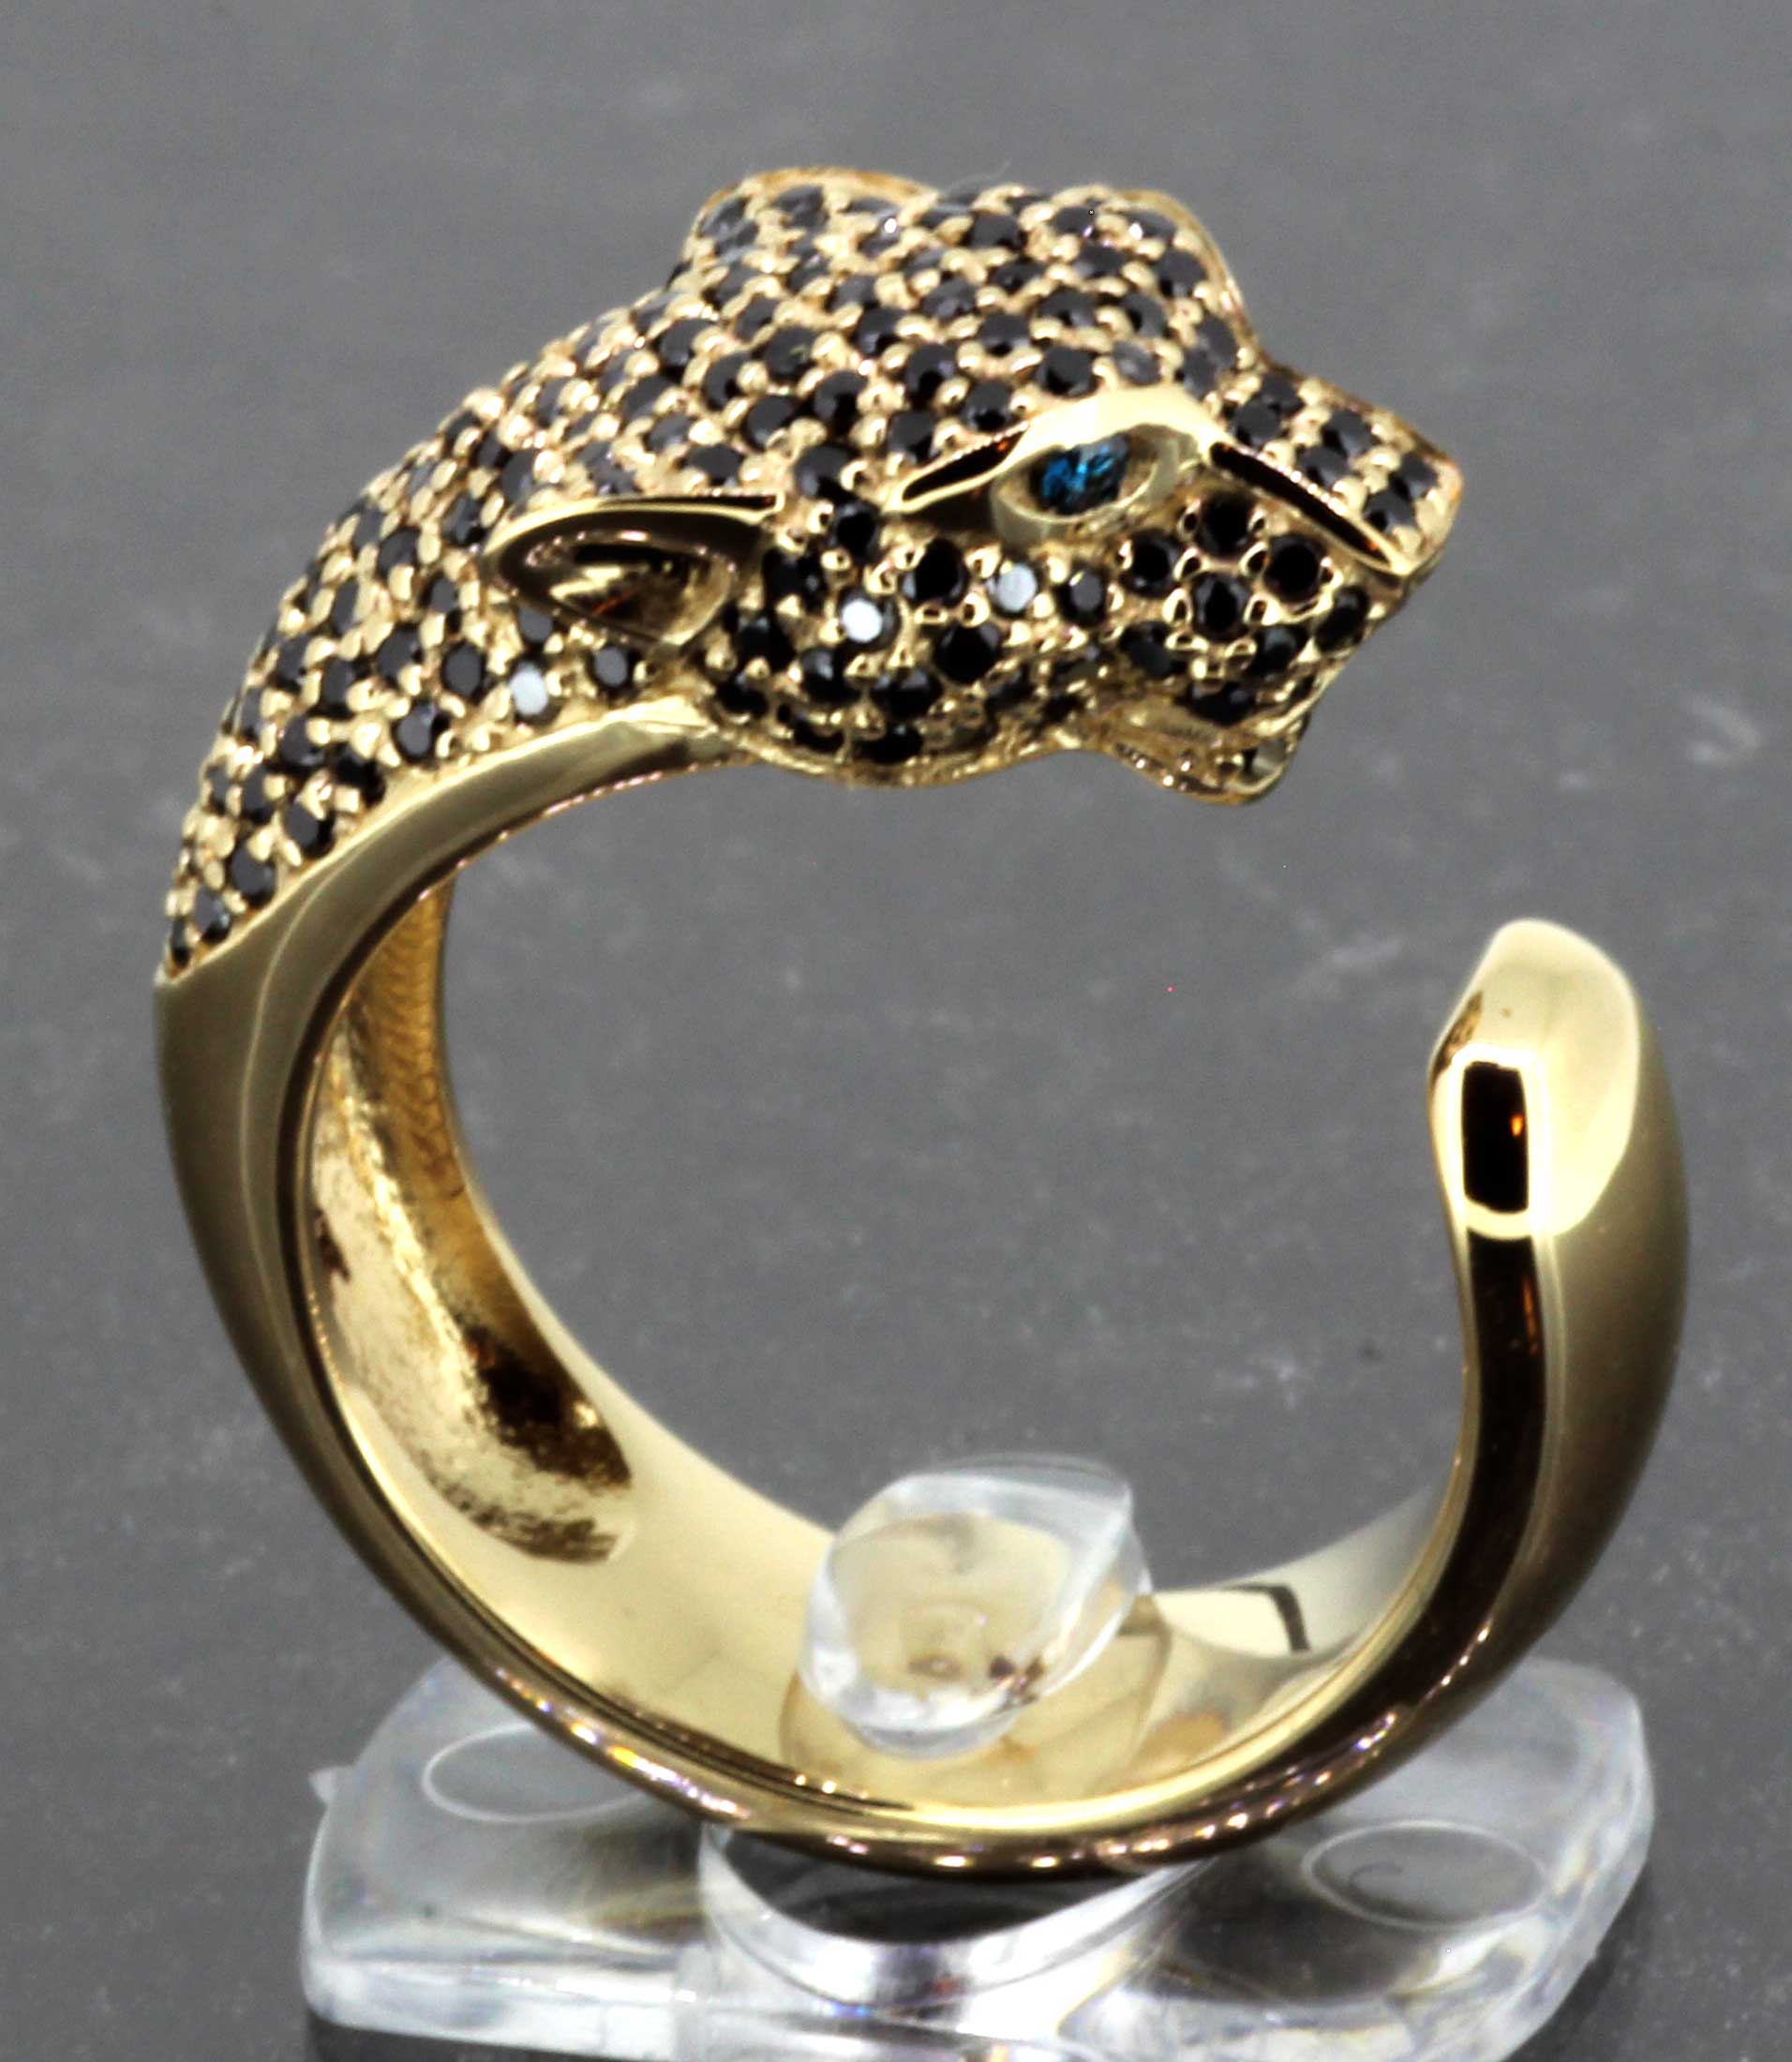 18K Panther Ring with Black Diamond Pave and Blue Diamond Eyes